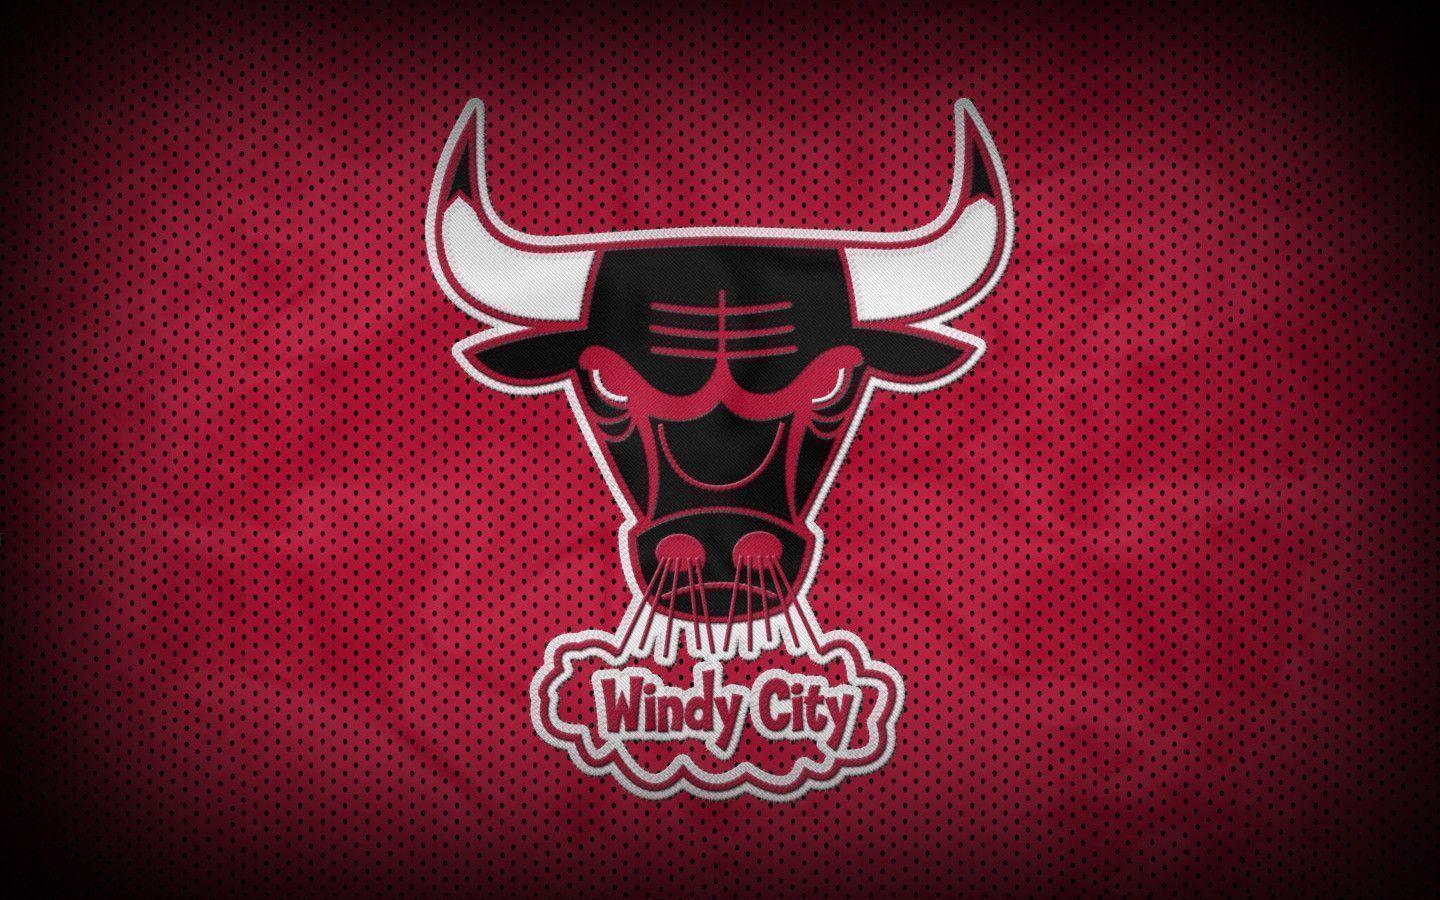 Nba Chicago Bulls Basketball Team Full Wallpapers 1600x1200 px Free